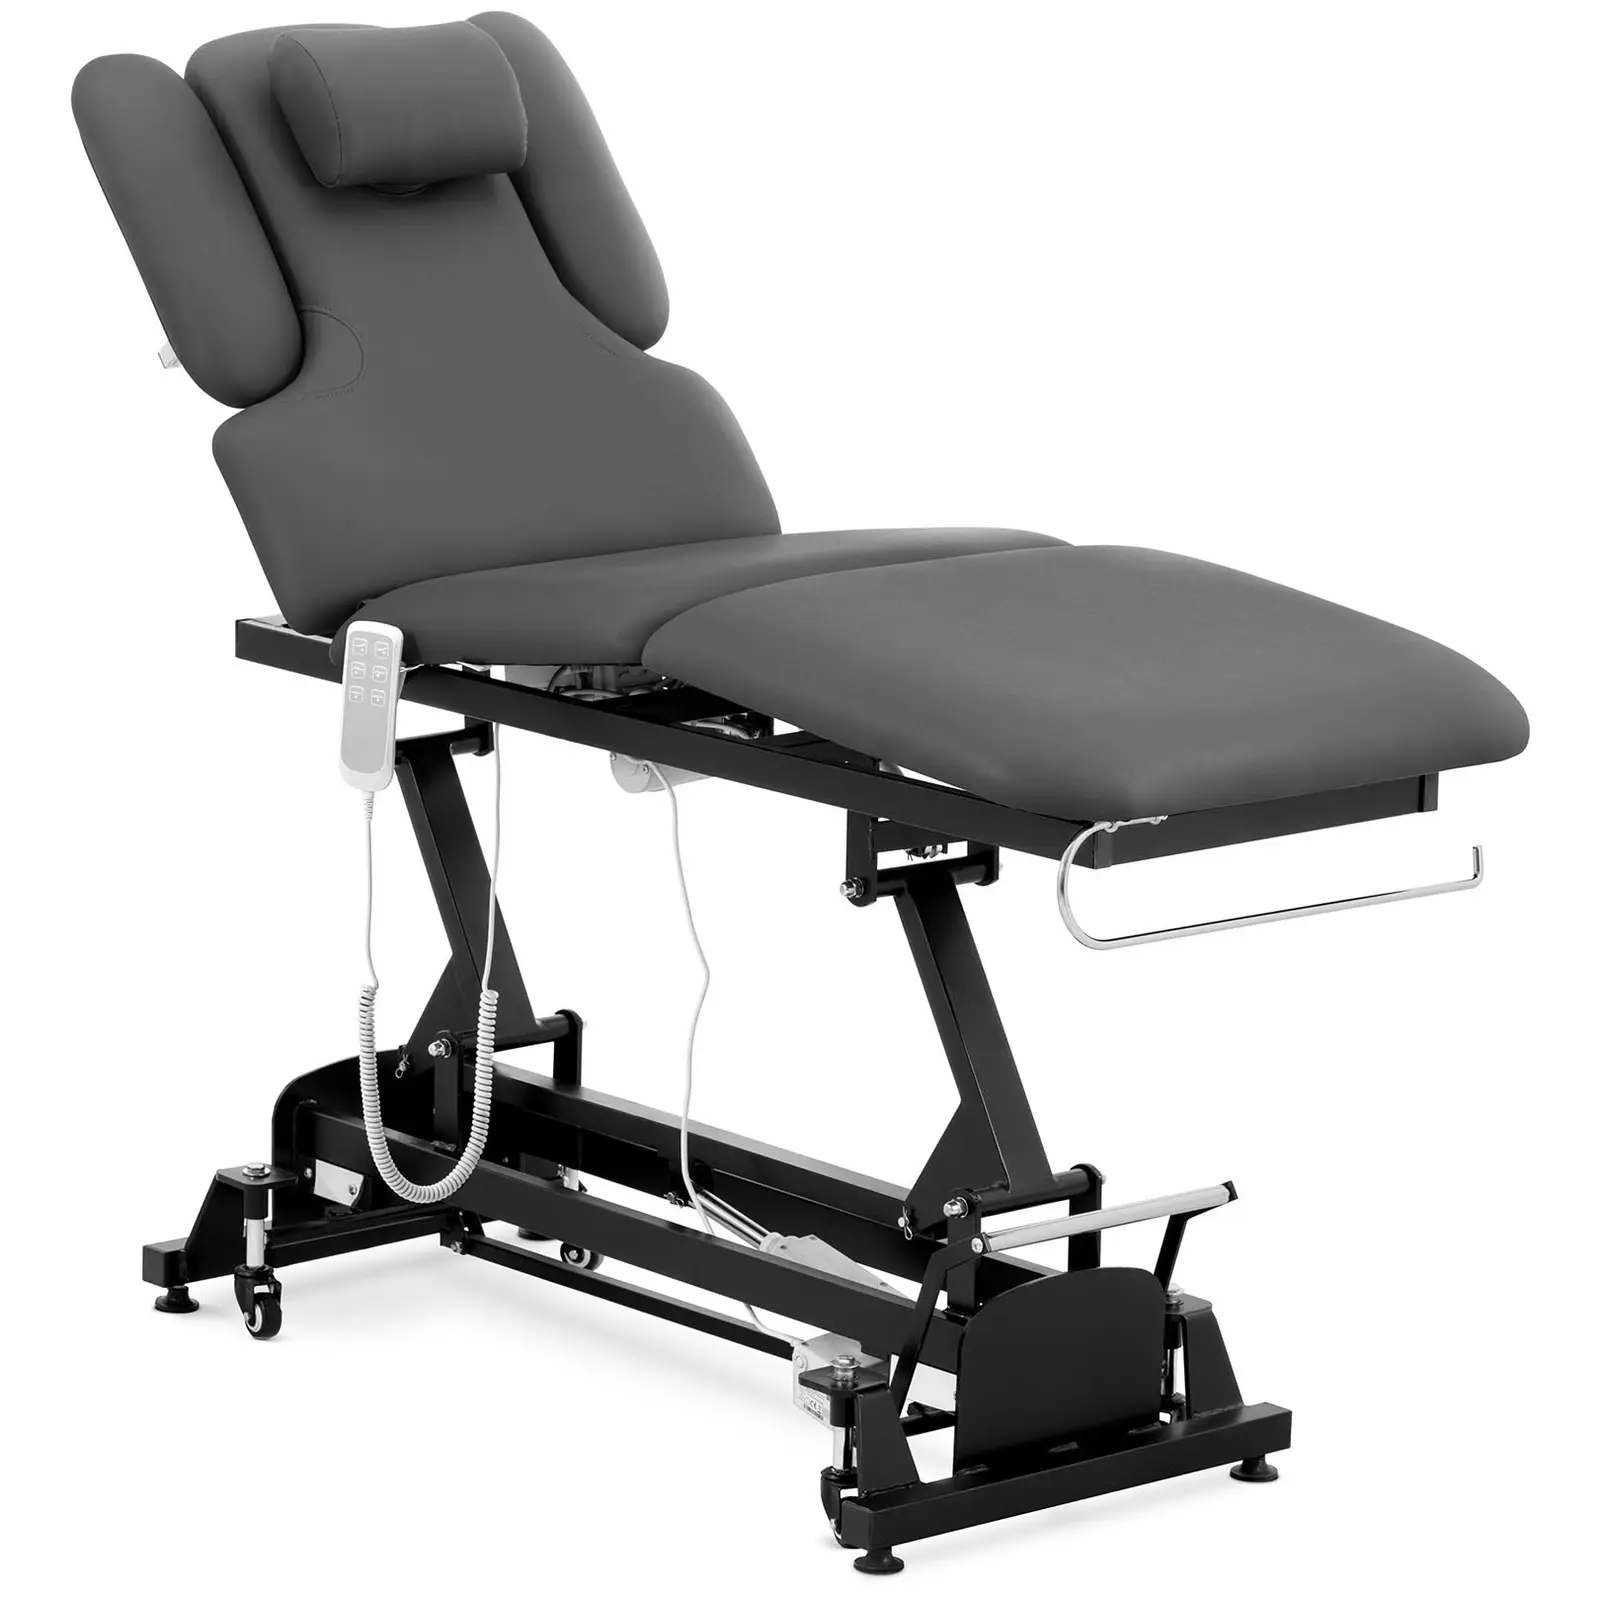 Stol za masažu - 3 motora - 250 kg - crno/sivo